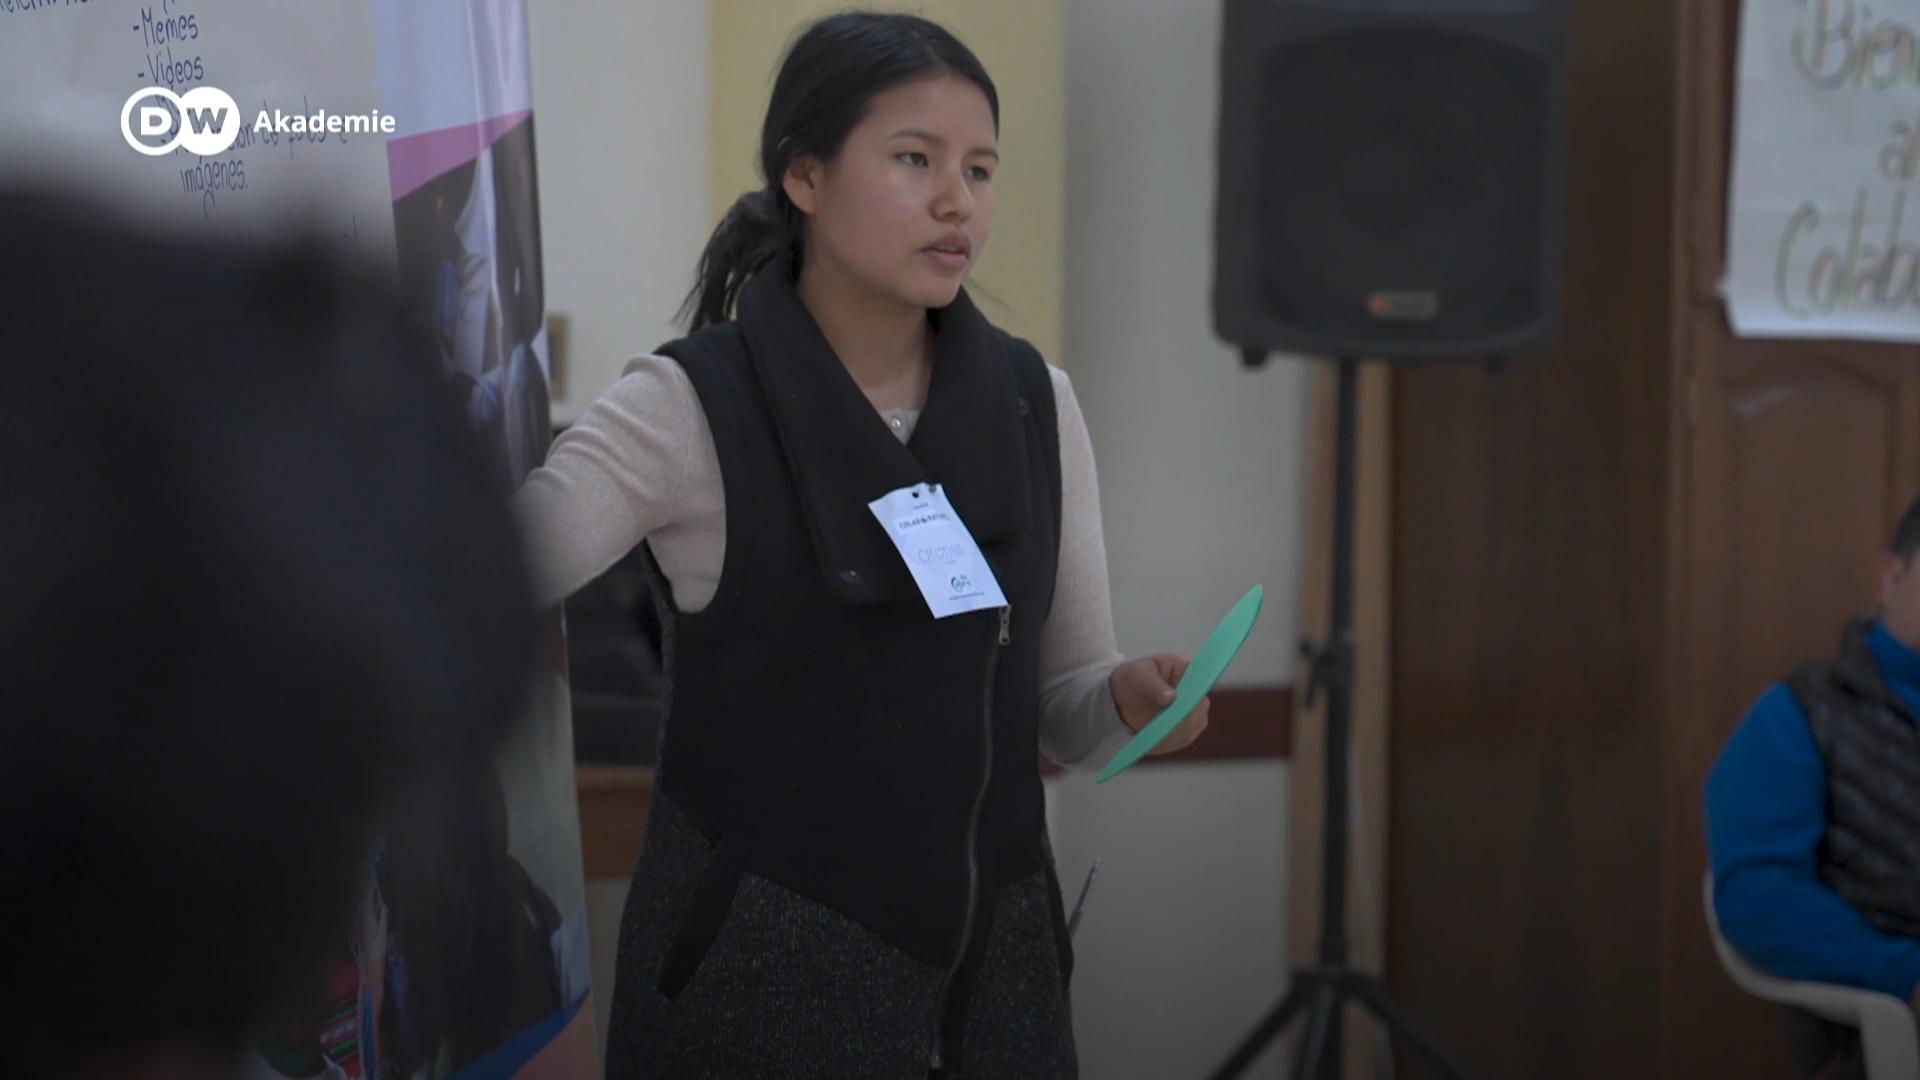 Bolivia: Teachers train to improve students' media skills 